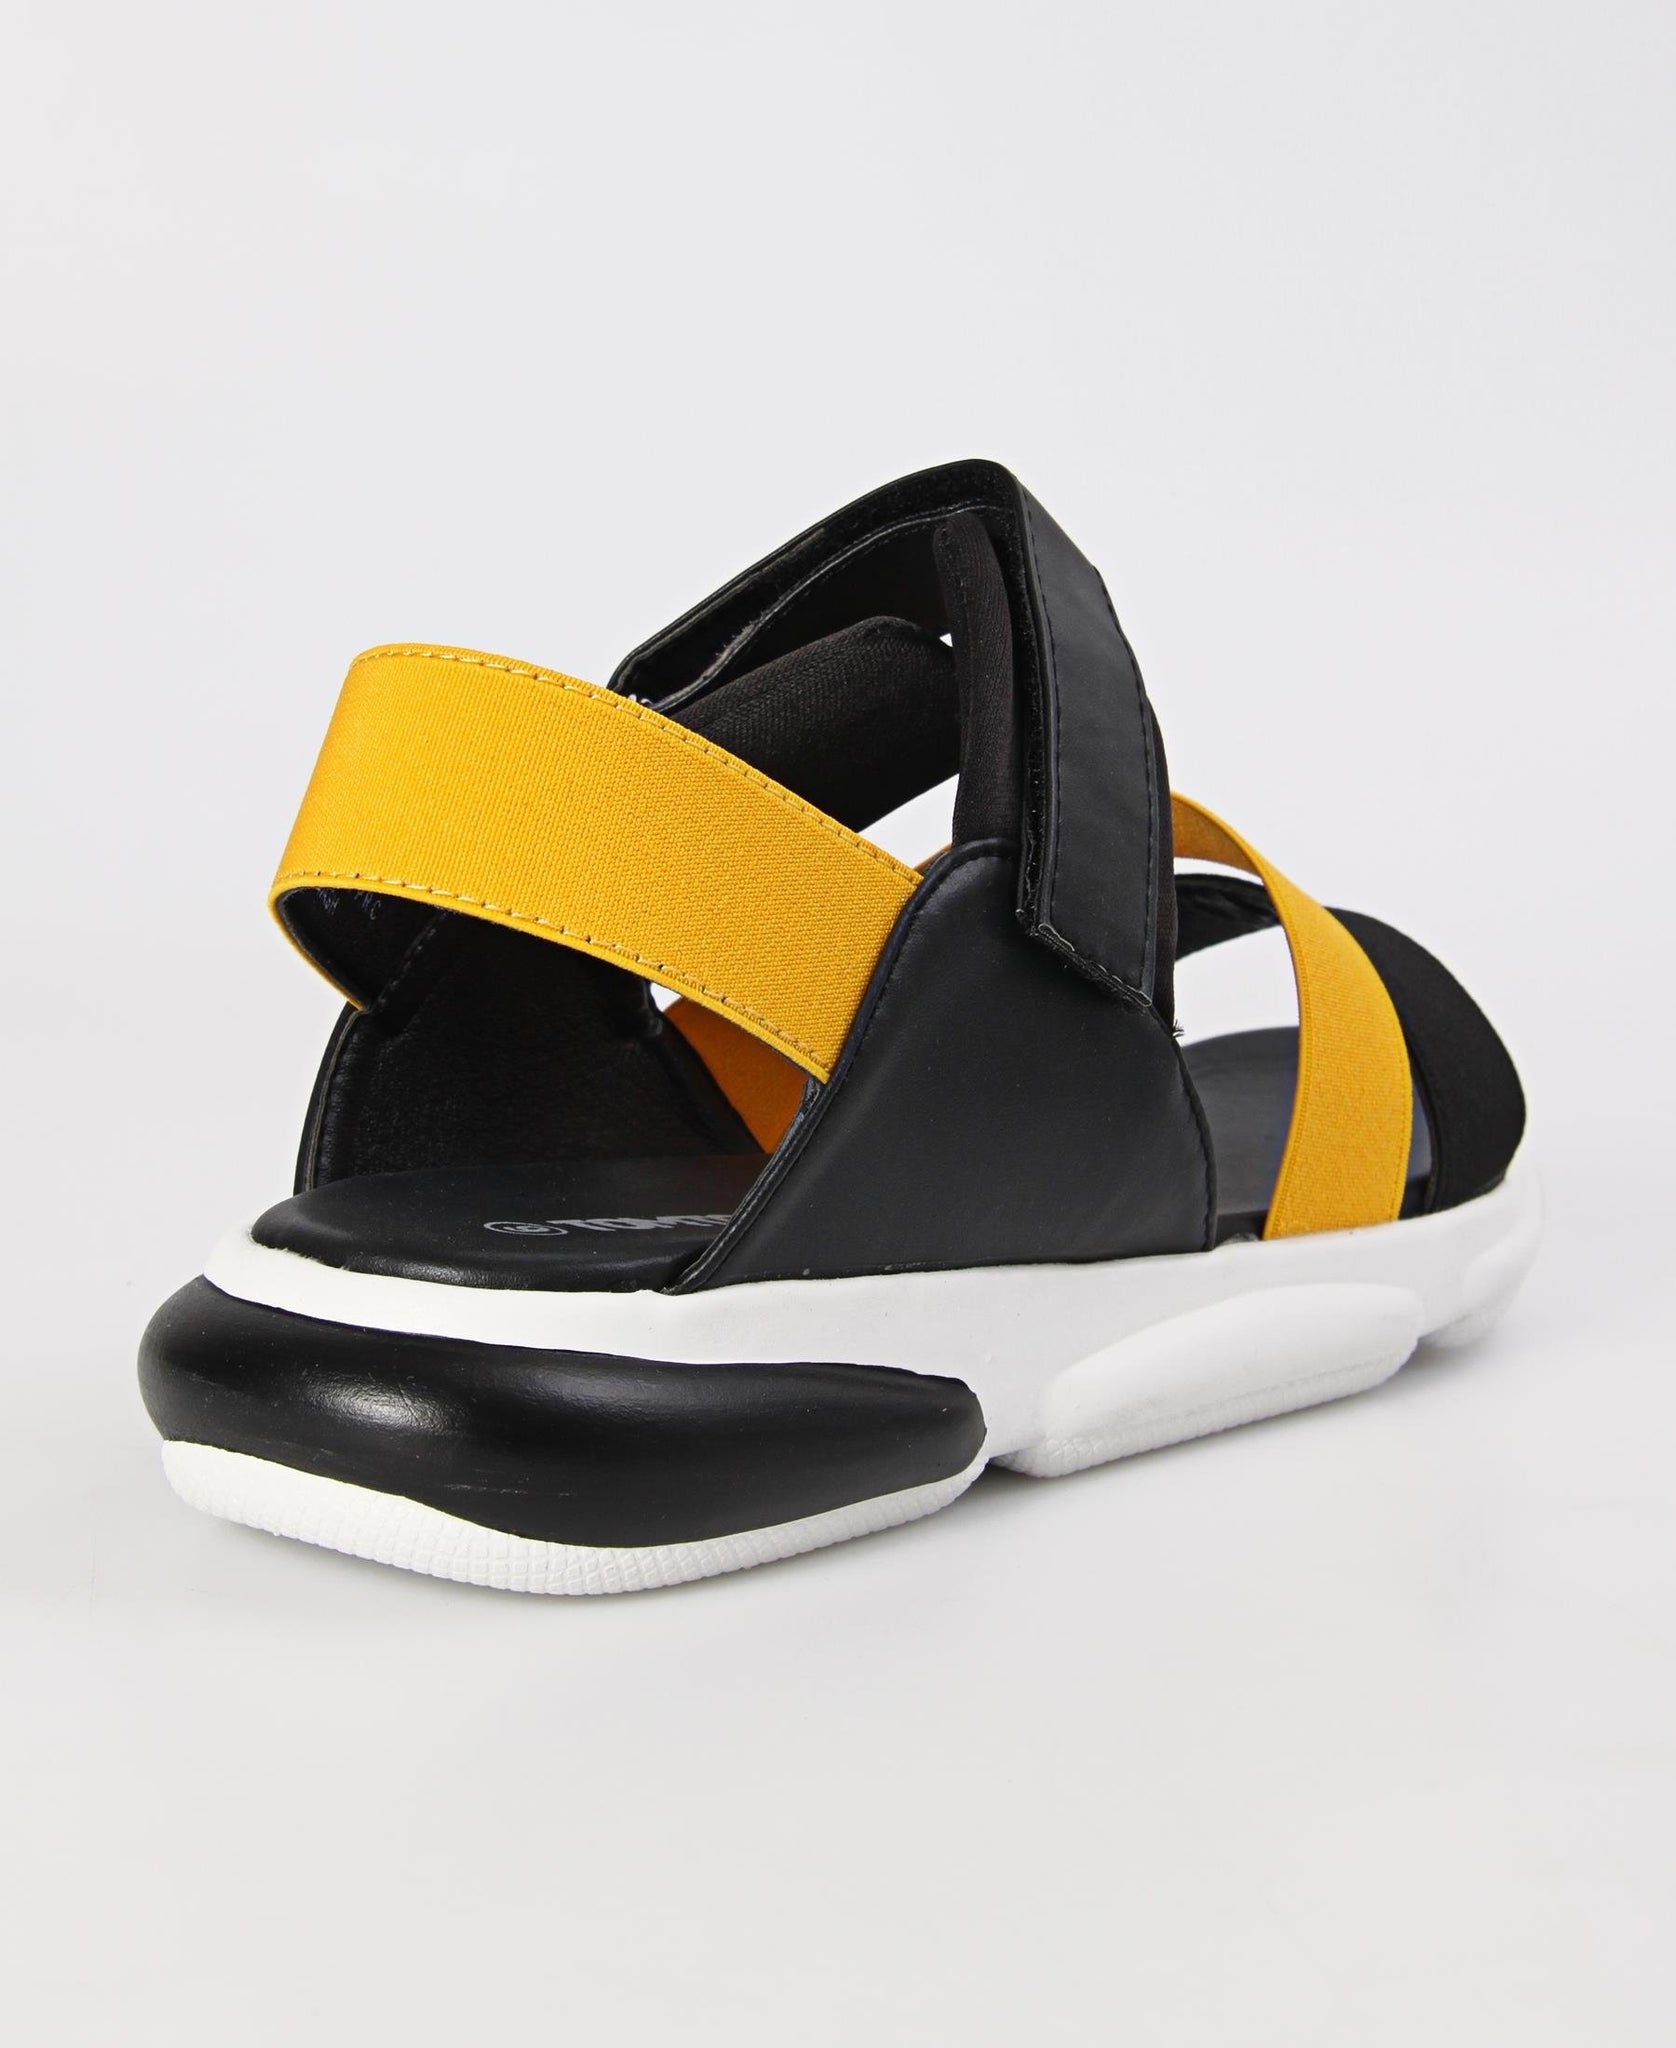 Velcro Strap Sandals - Black-Yellow - planet54.com